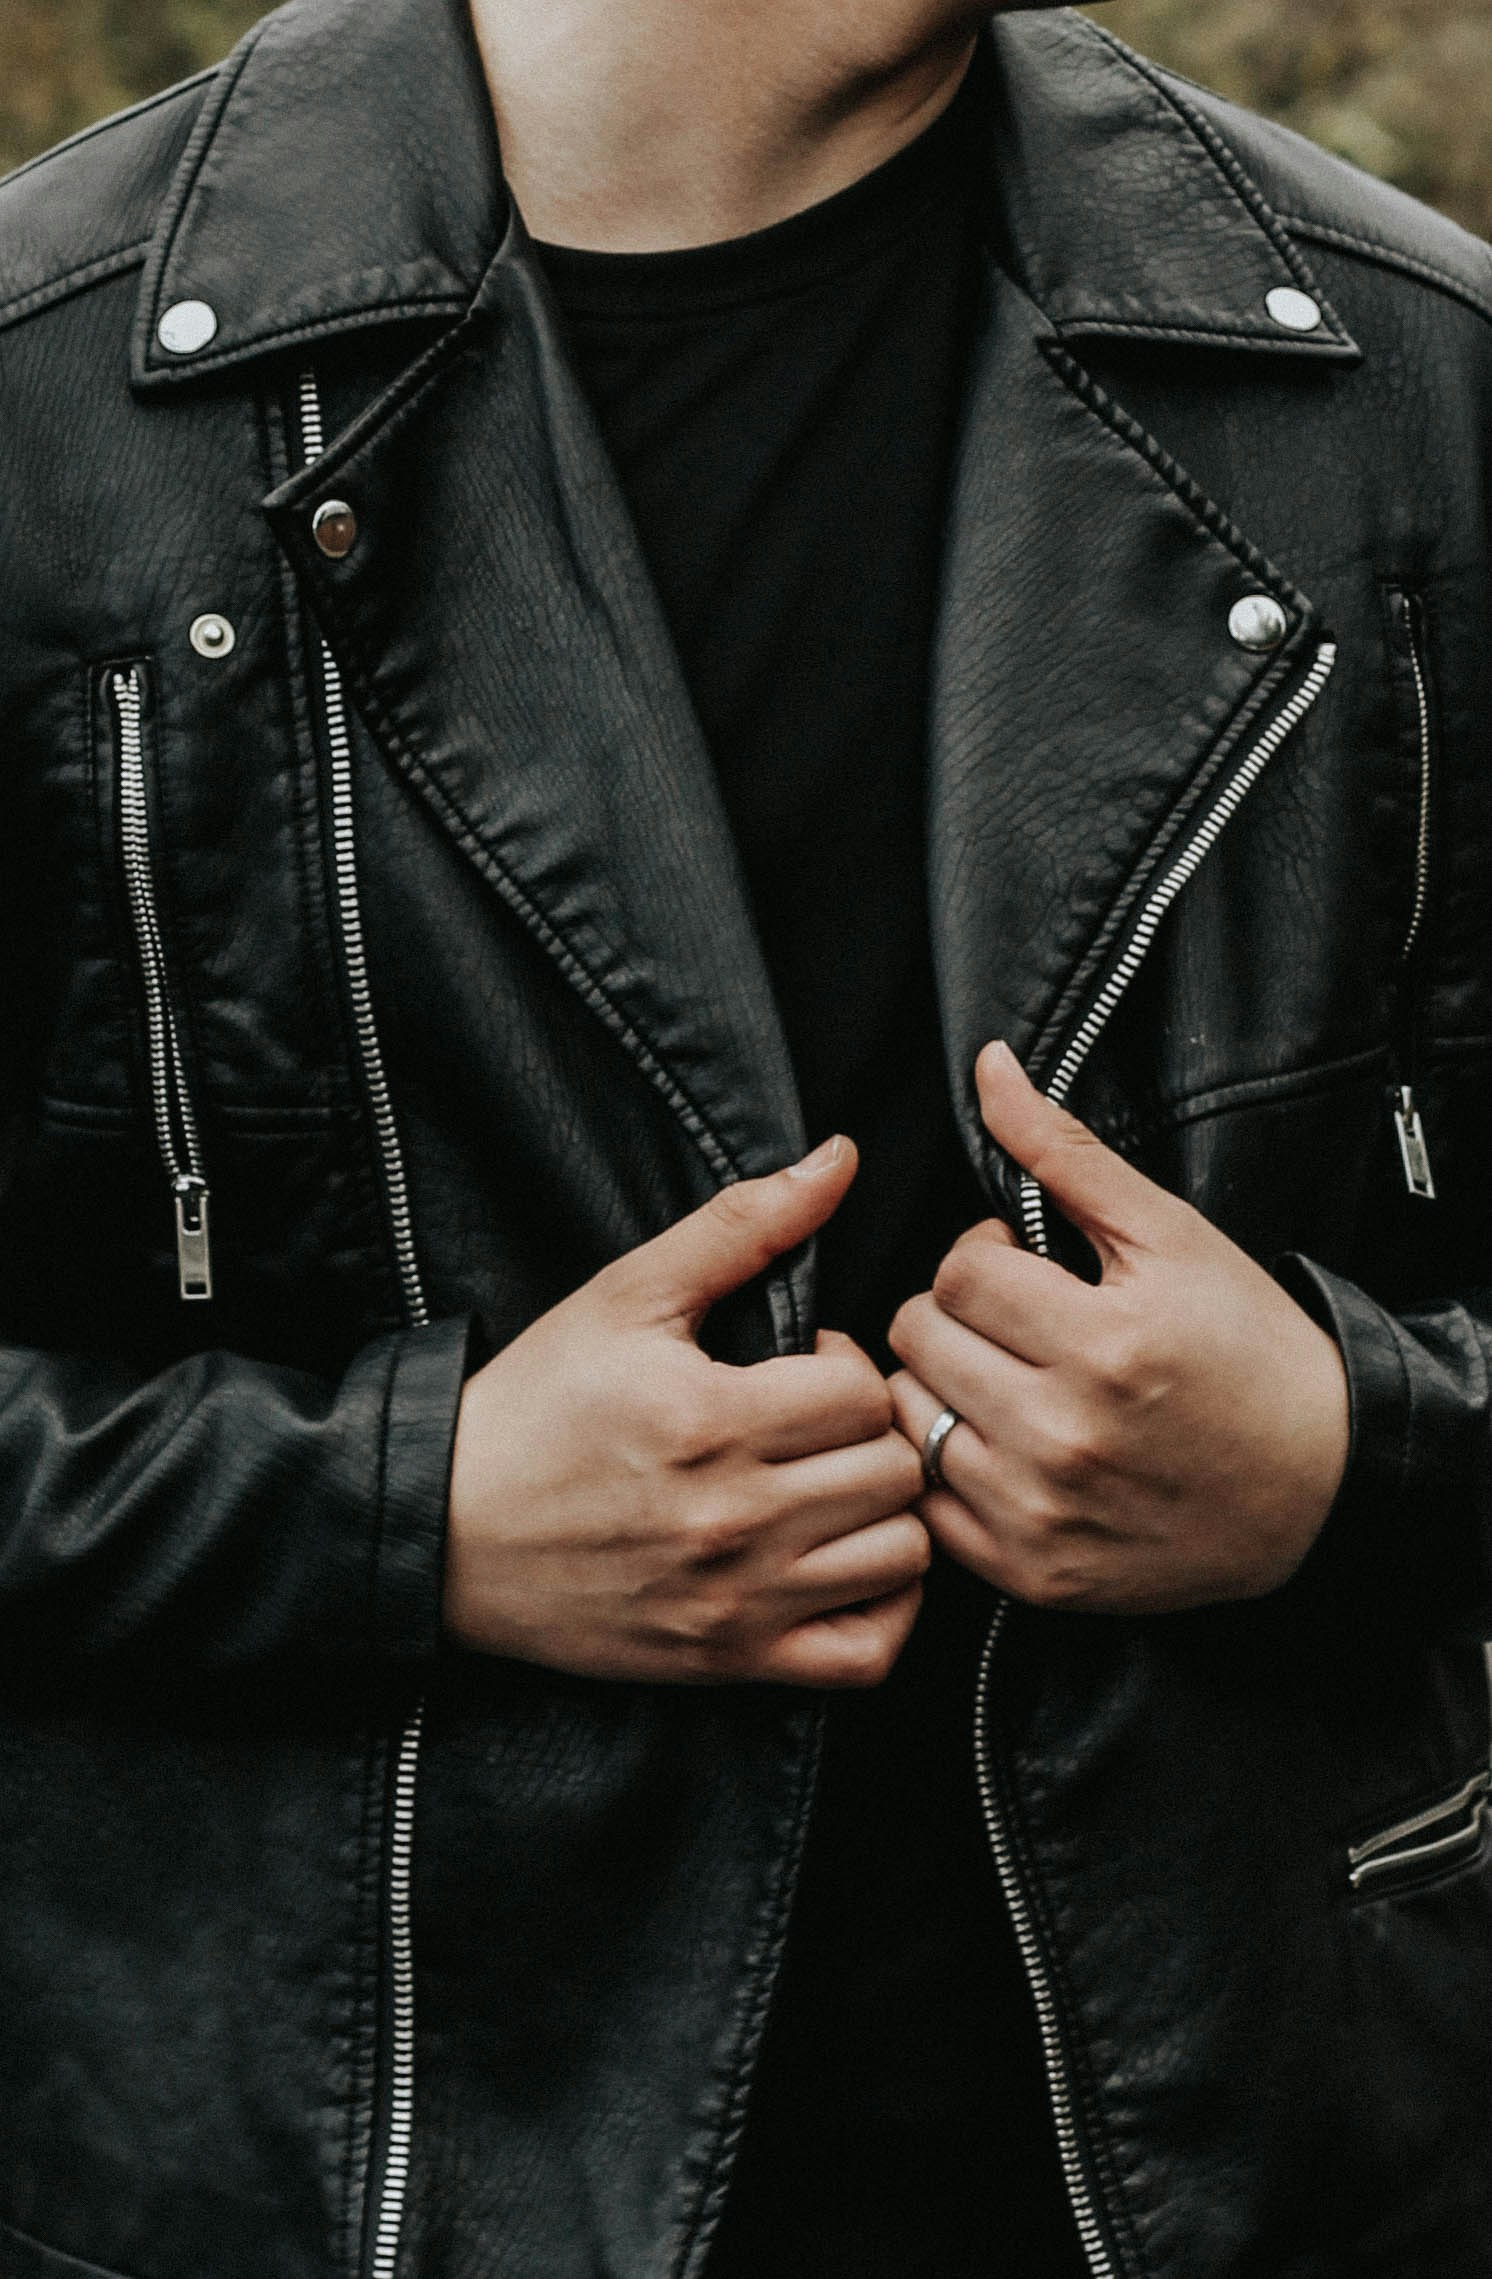 A man wearing a leather jacket | Source: Unsplash